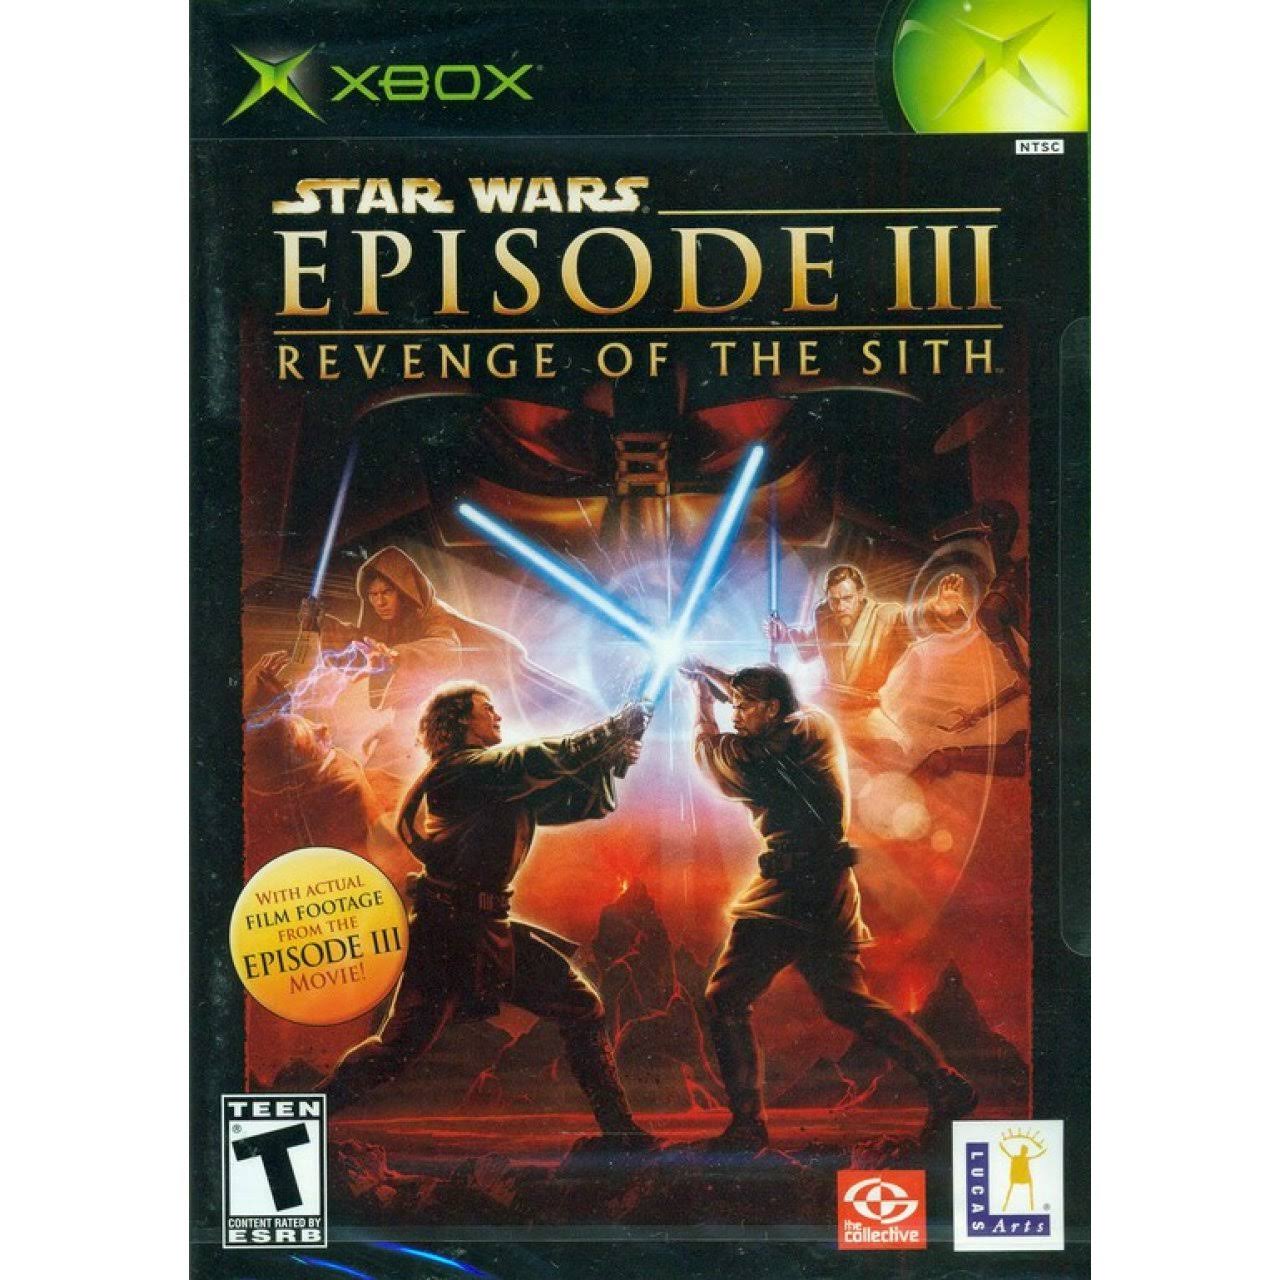 Star Wars Episode III Revenge of the Sith - Xbox